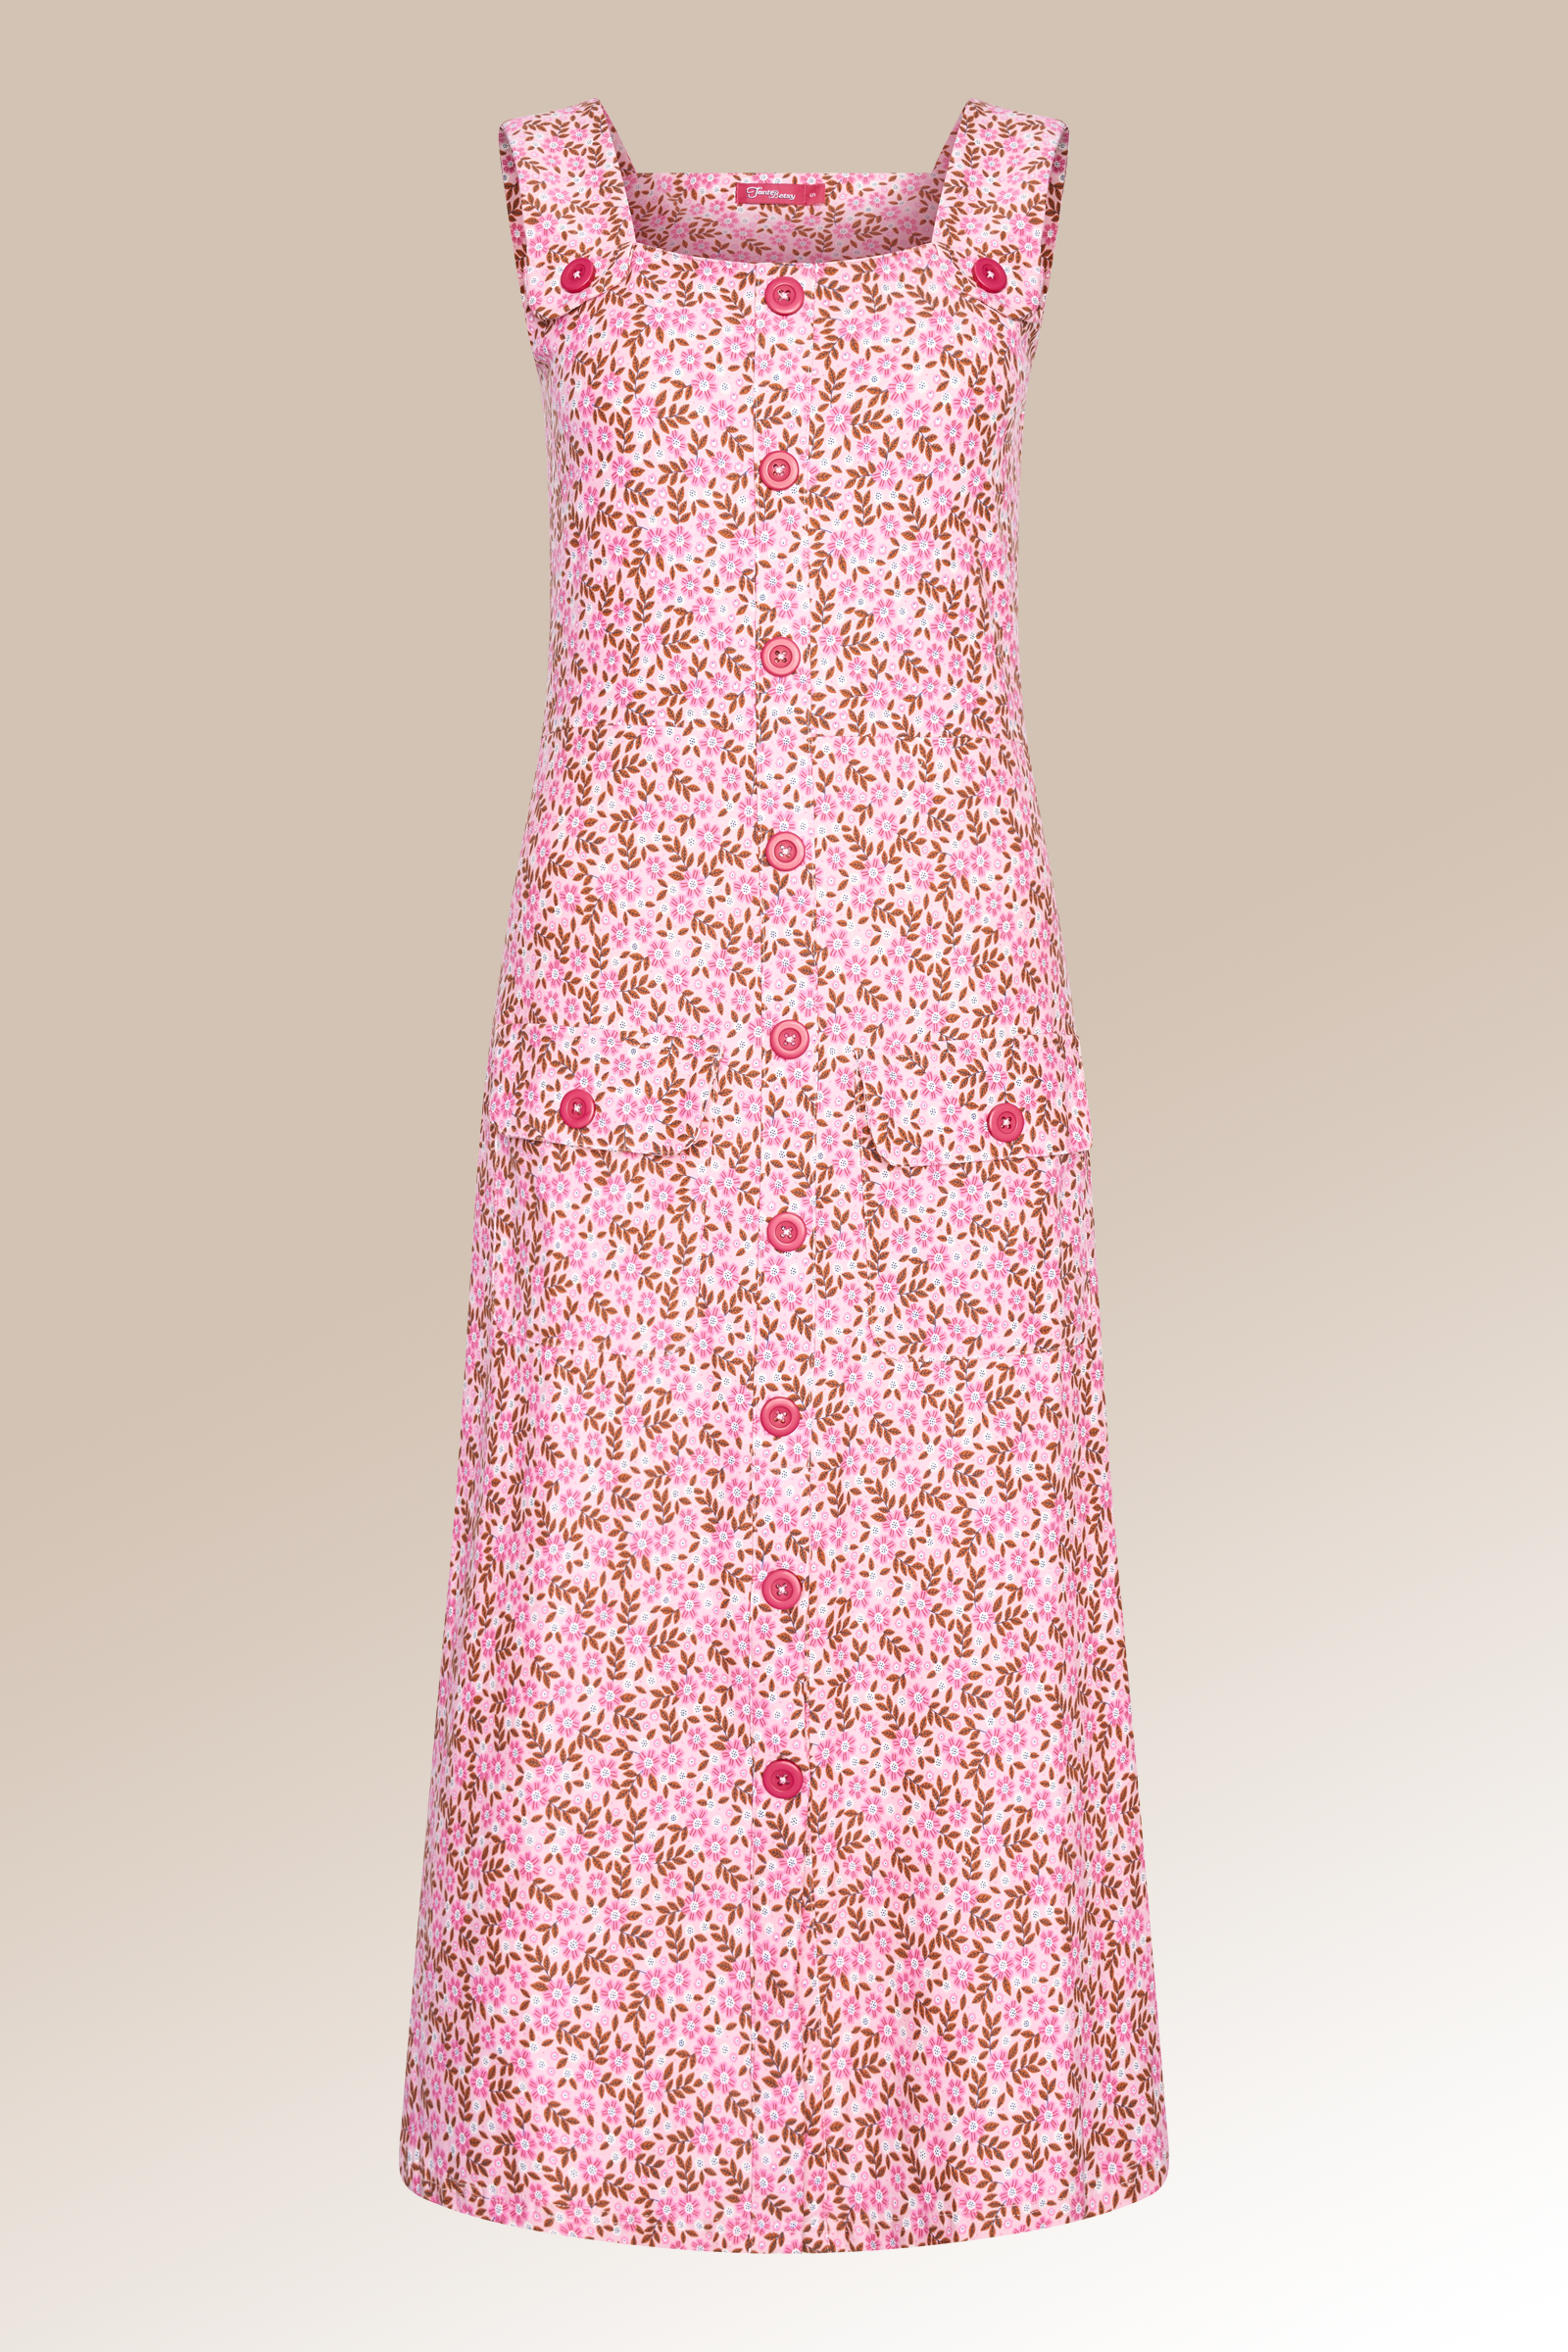 Dress Dolce Liberty Pink